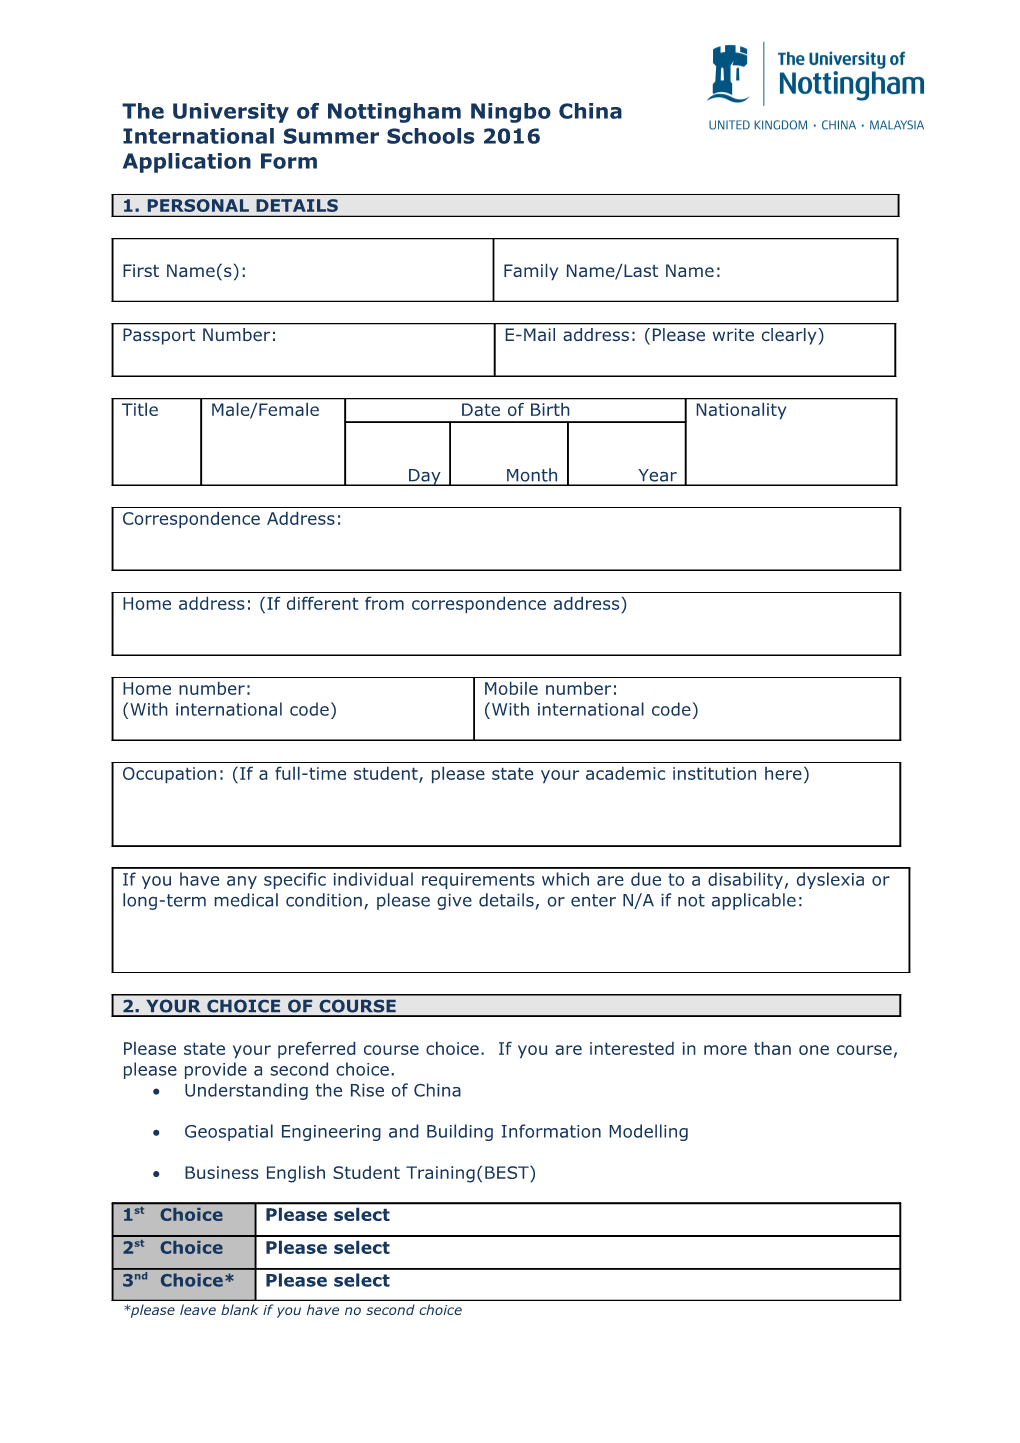 UNNC-International-Summer-School-Application-Form